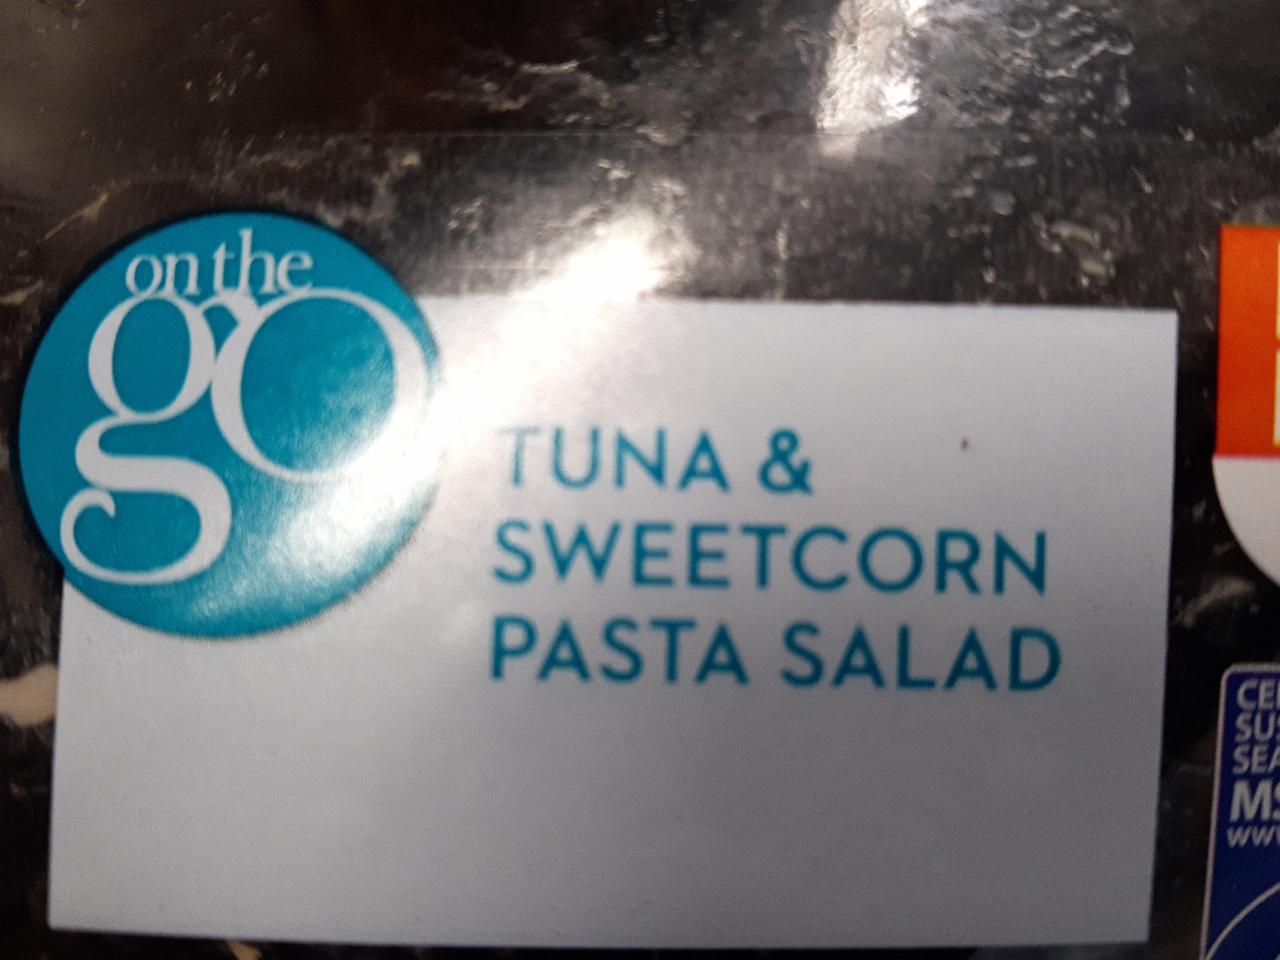 Fotografie - Tuna & Sweetcorn pasta salad On the go